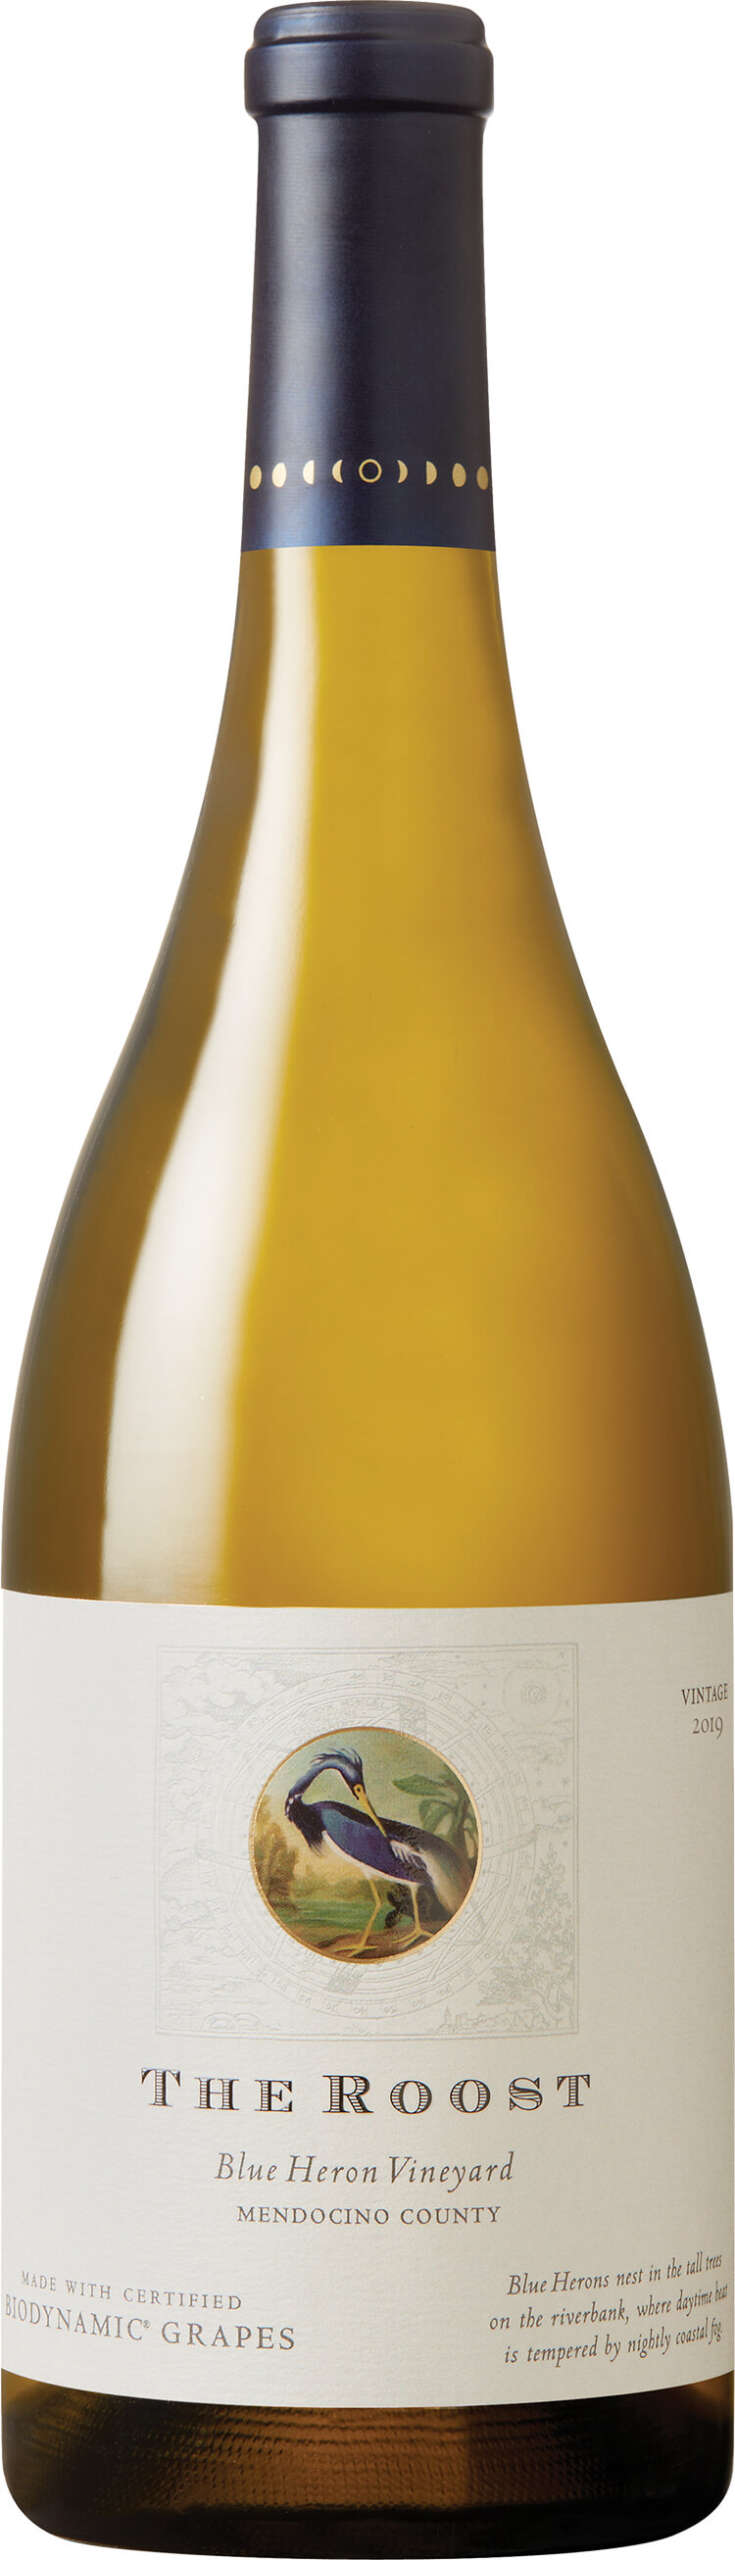 2020 Bonterra Chardonnay The Roost Mendocino County